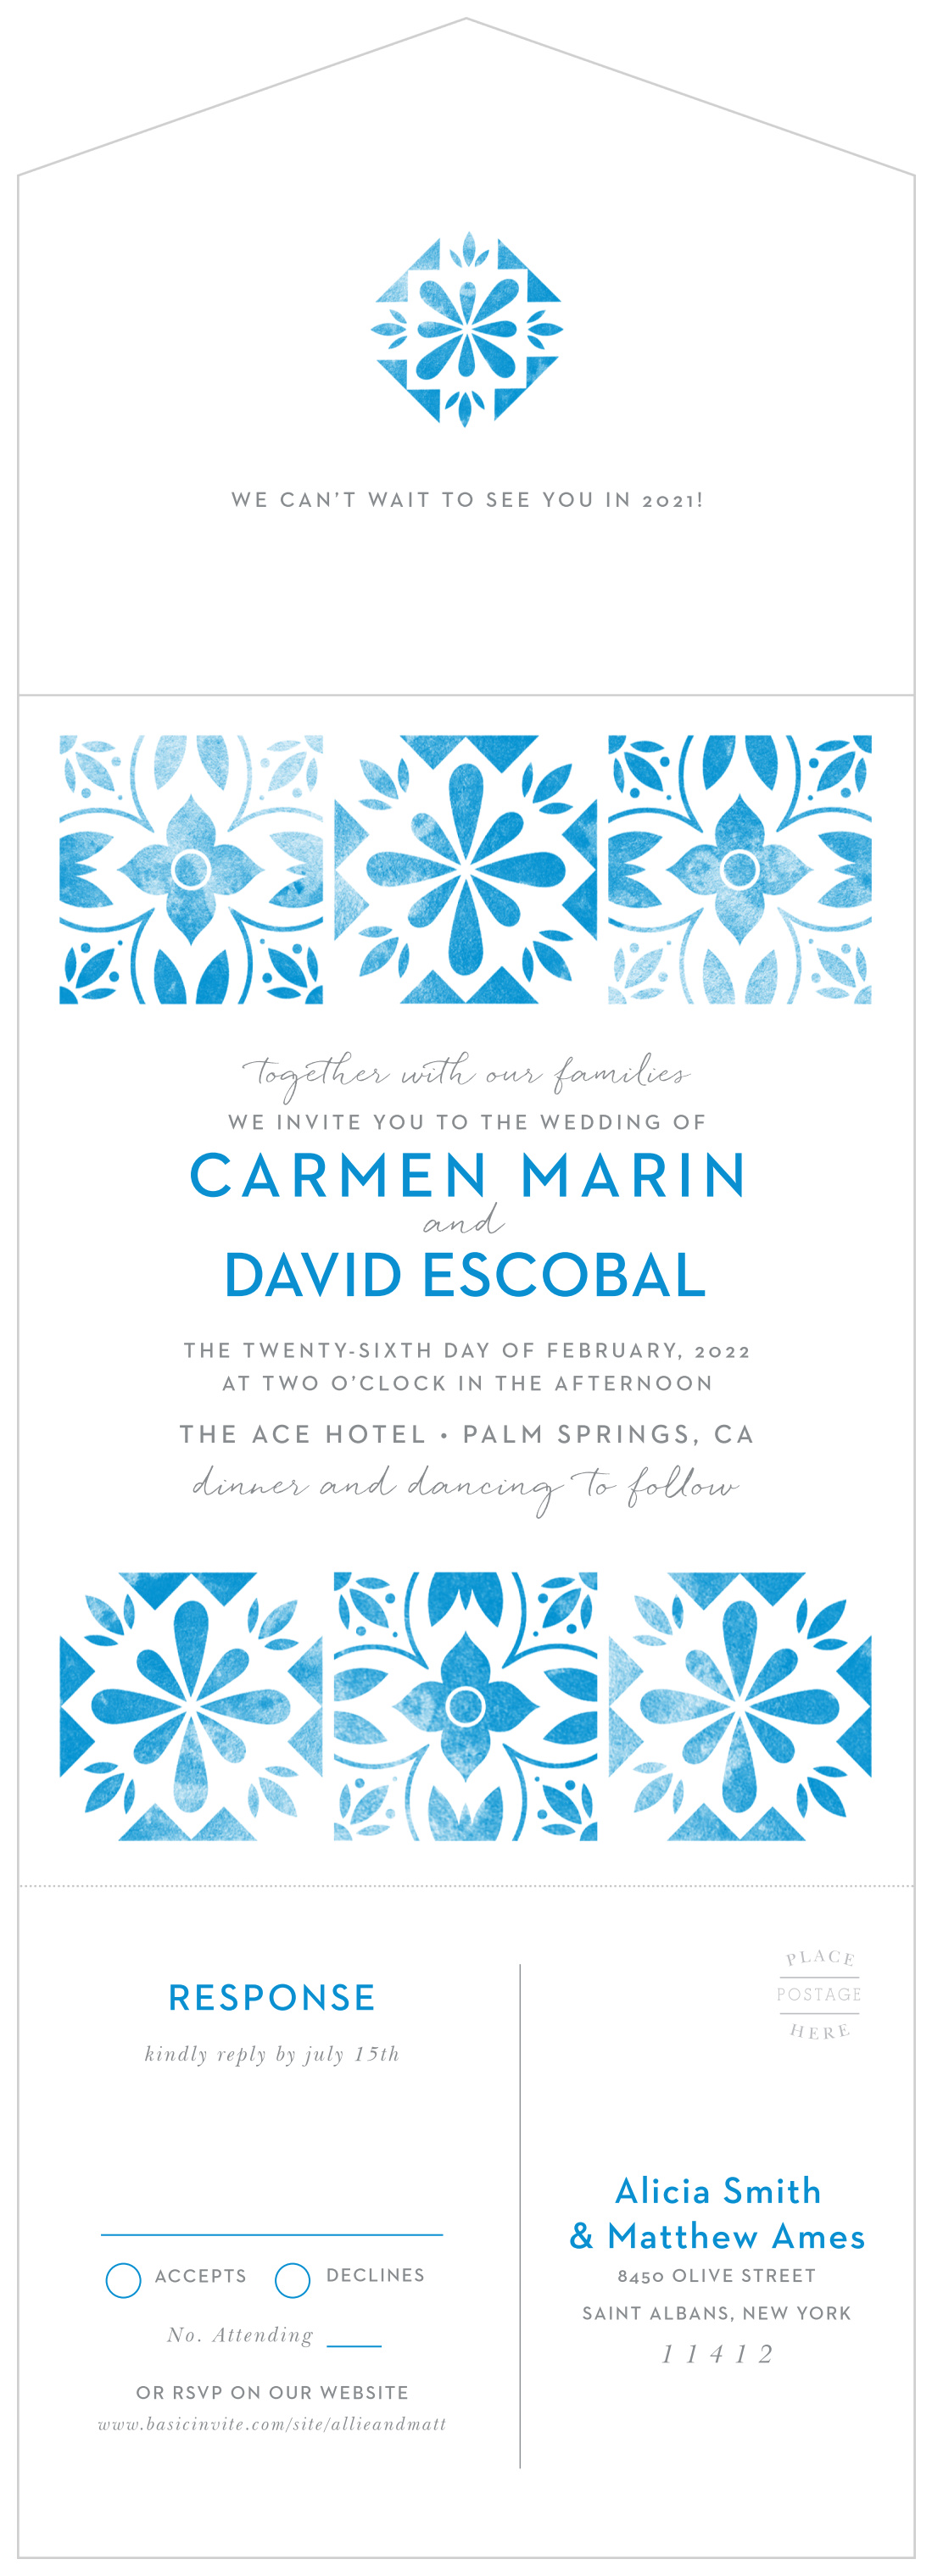 Mexican Tile Seal & Send Wedding Invitations